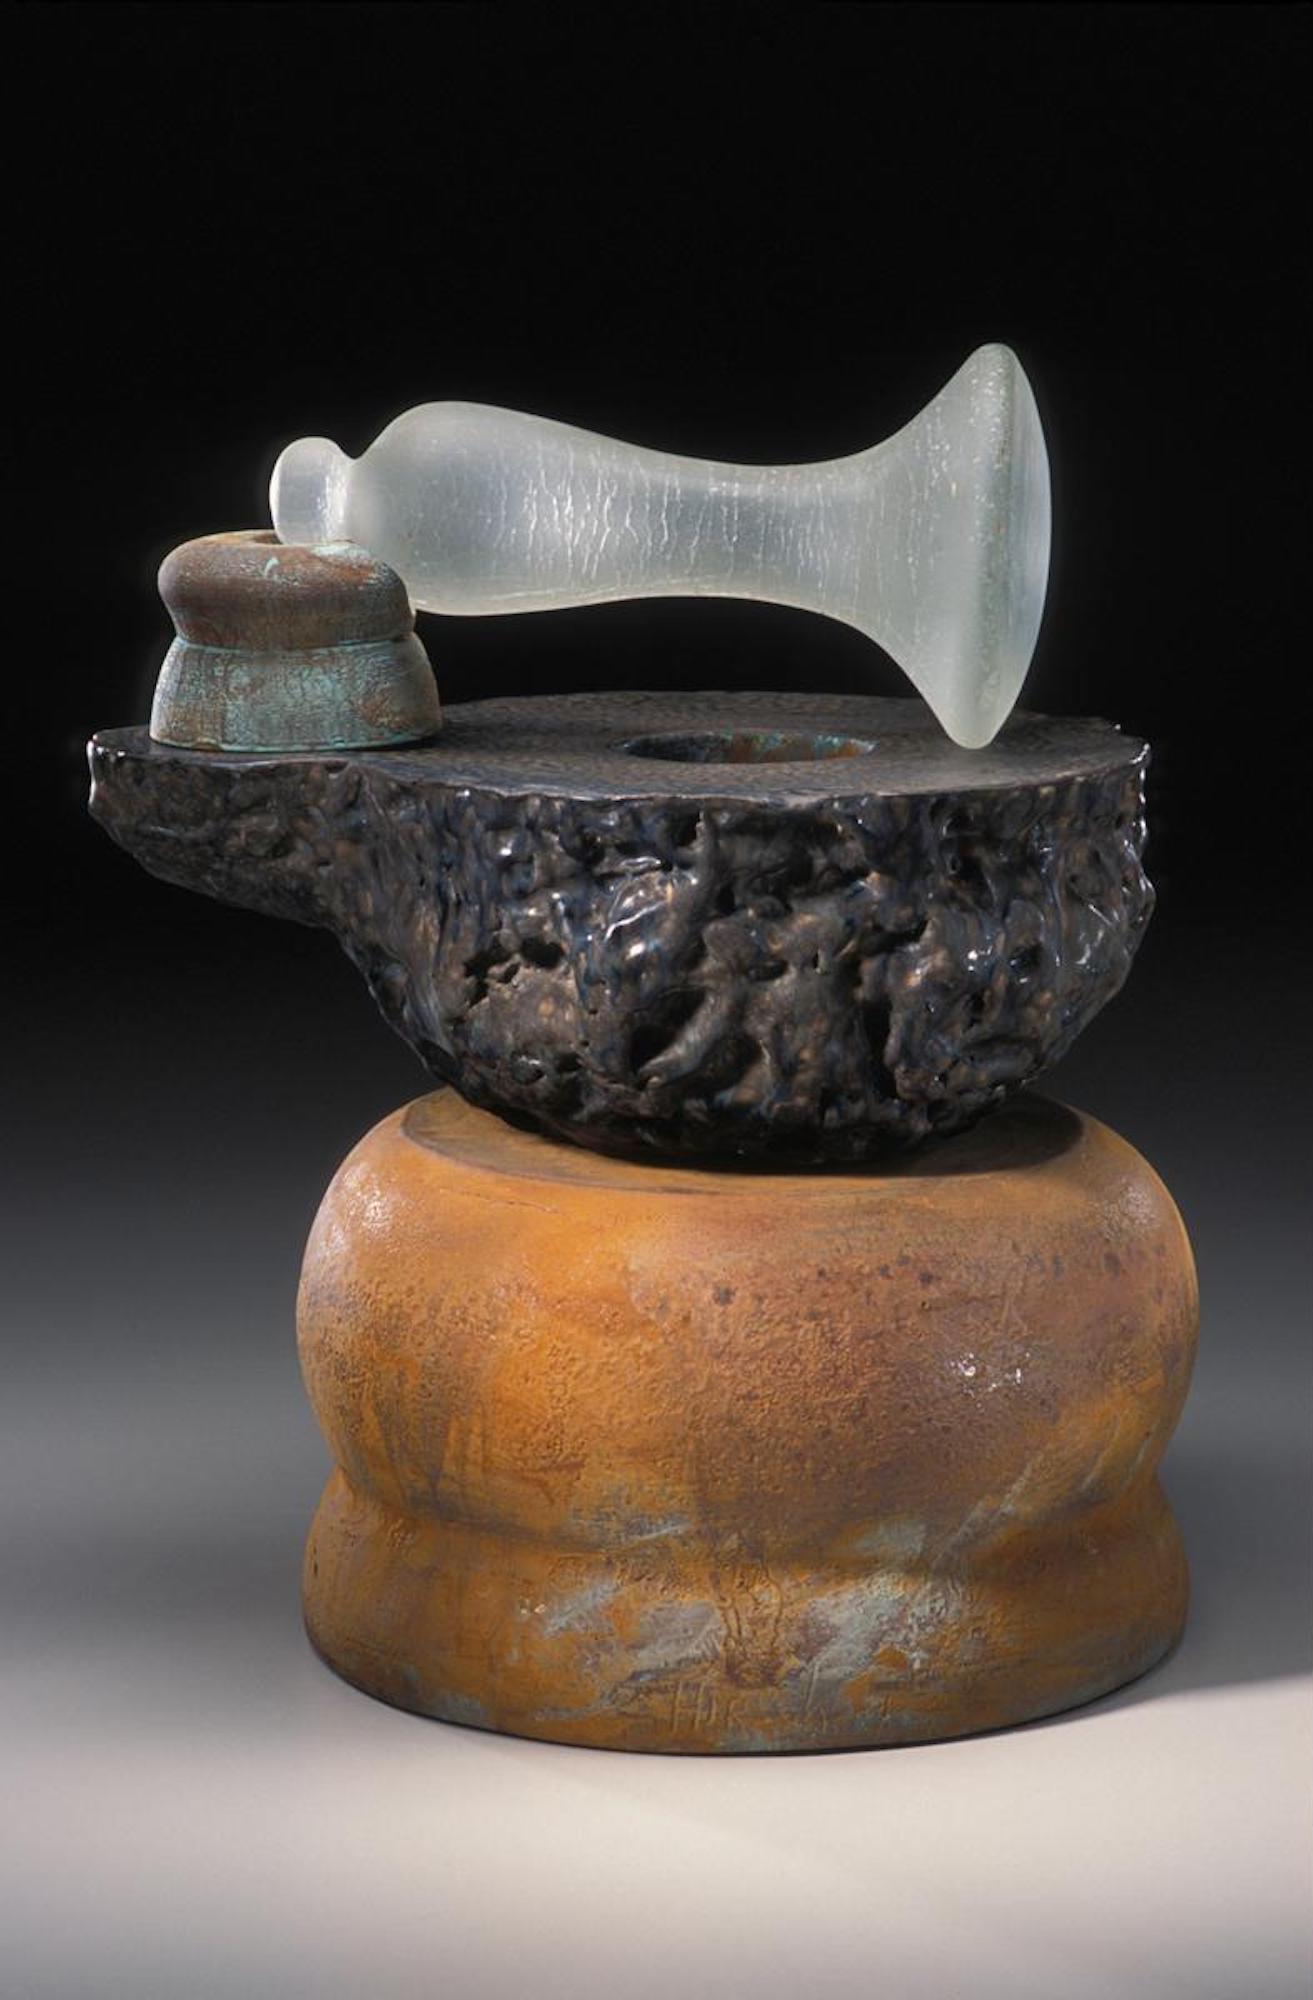 Contemporary Richard Hirsch Ceramic Mortar and Blown Glass Pestle Sculpture #10, 2004 For Sale